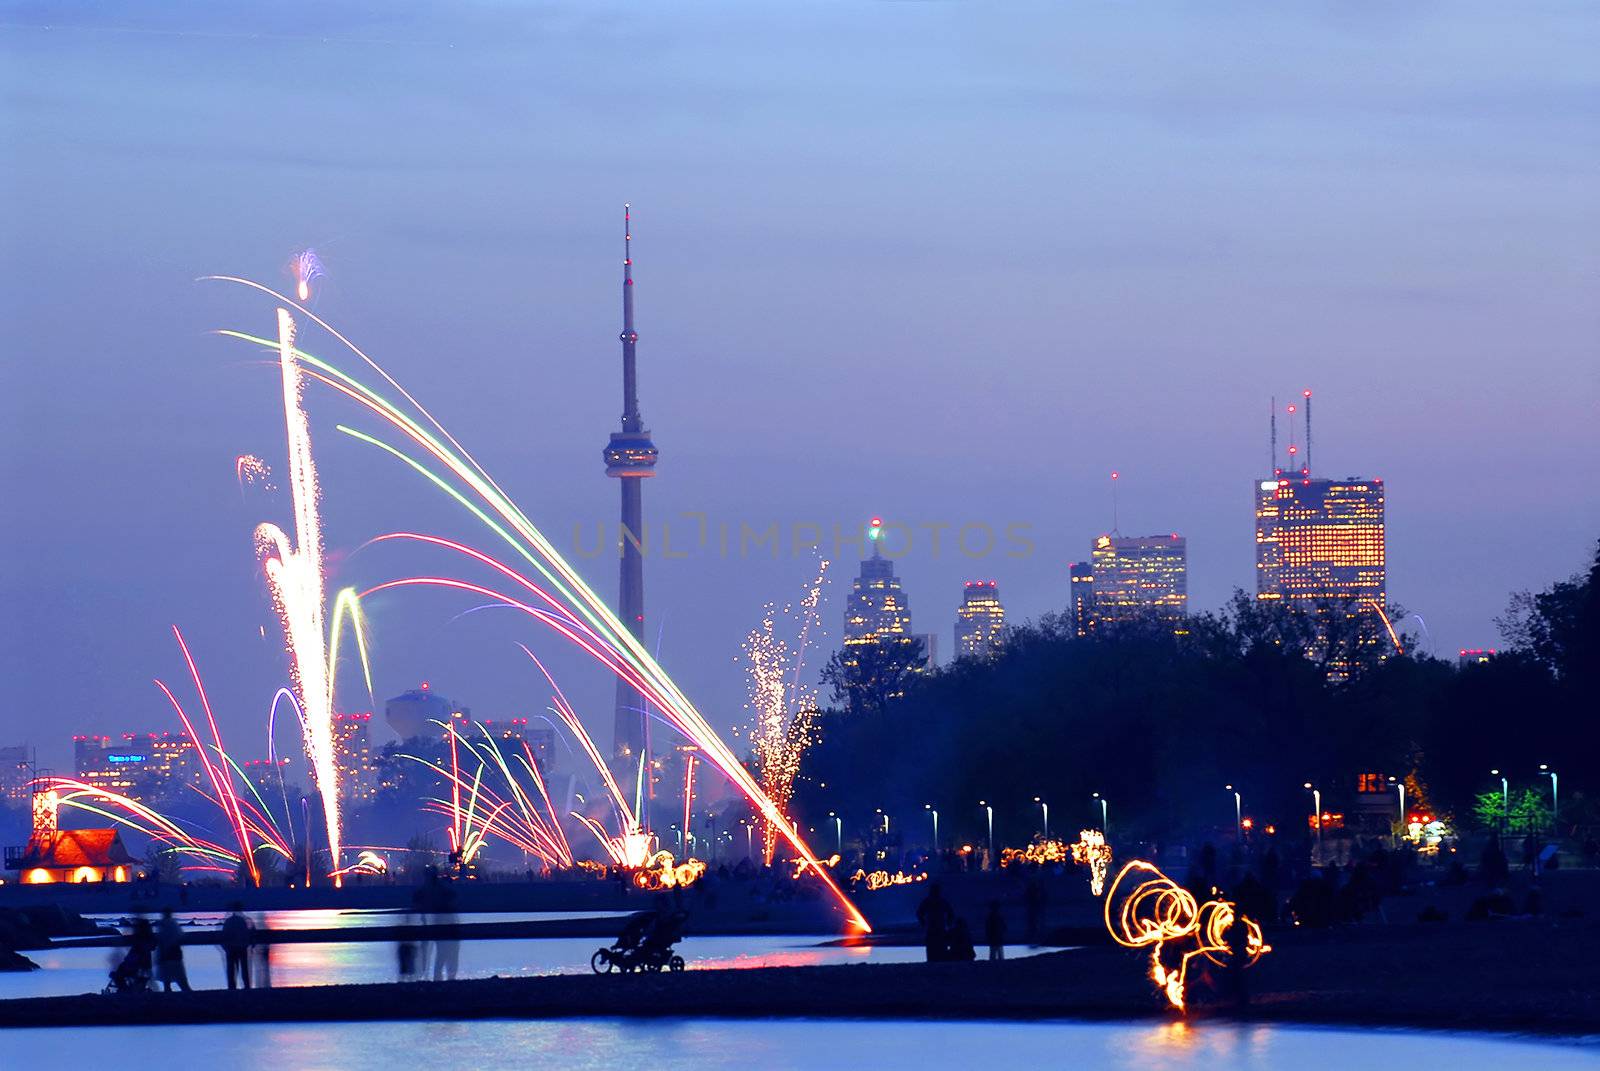 Toronto fireworks by elenathewise